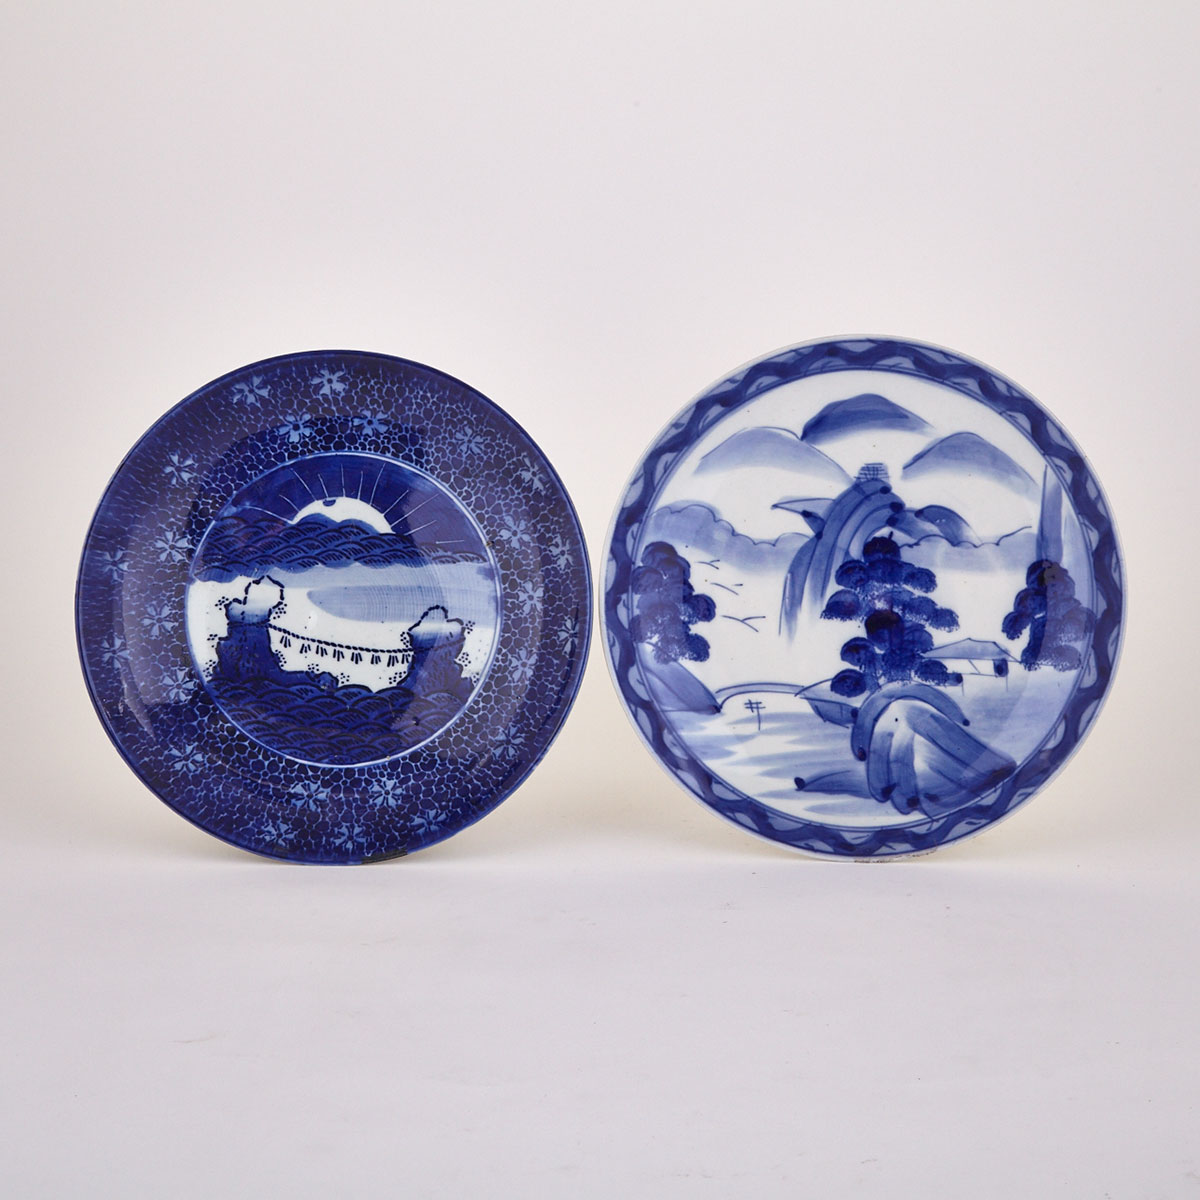 Pair of Blue and White Plates Plates, Meiji Period, Circa 1900